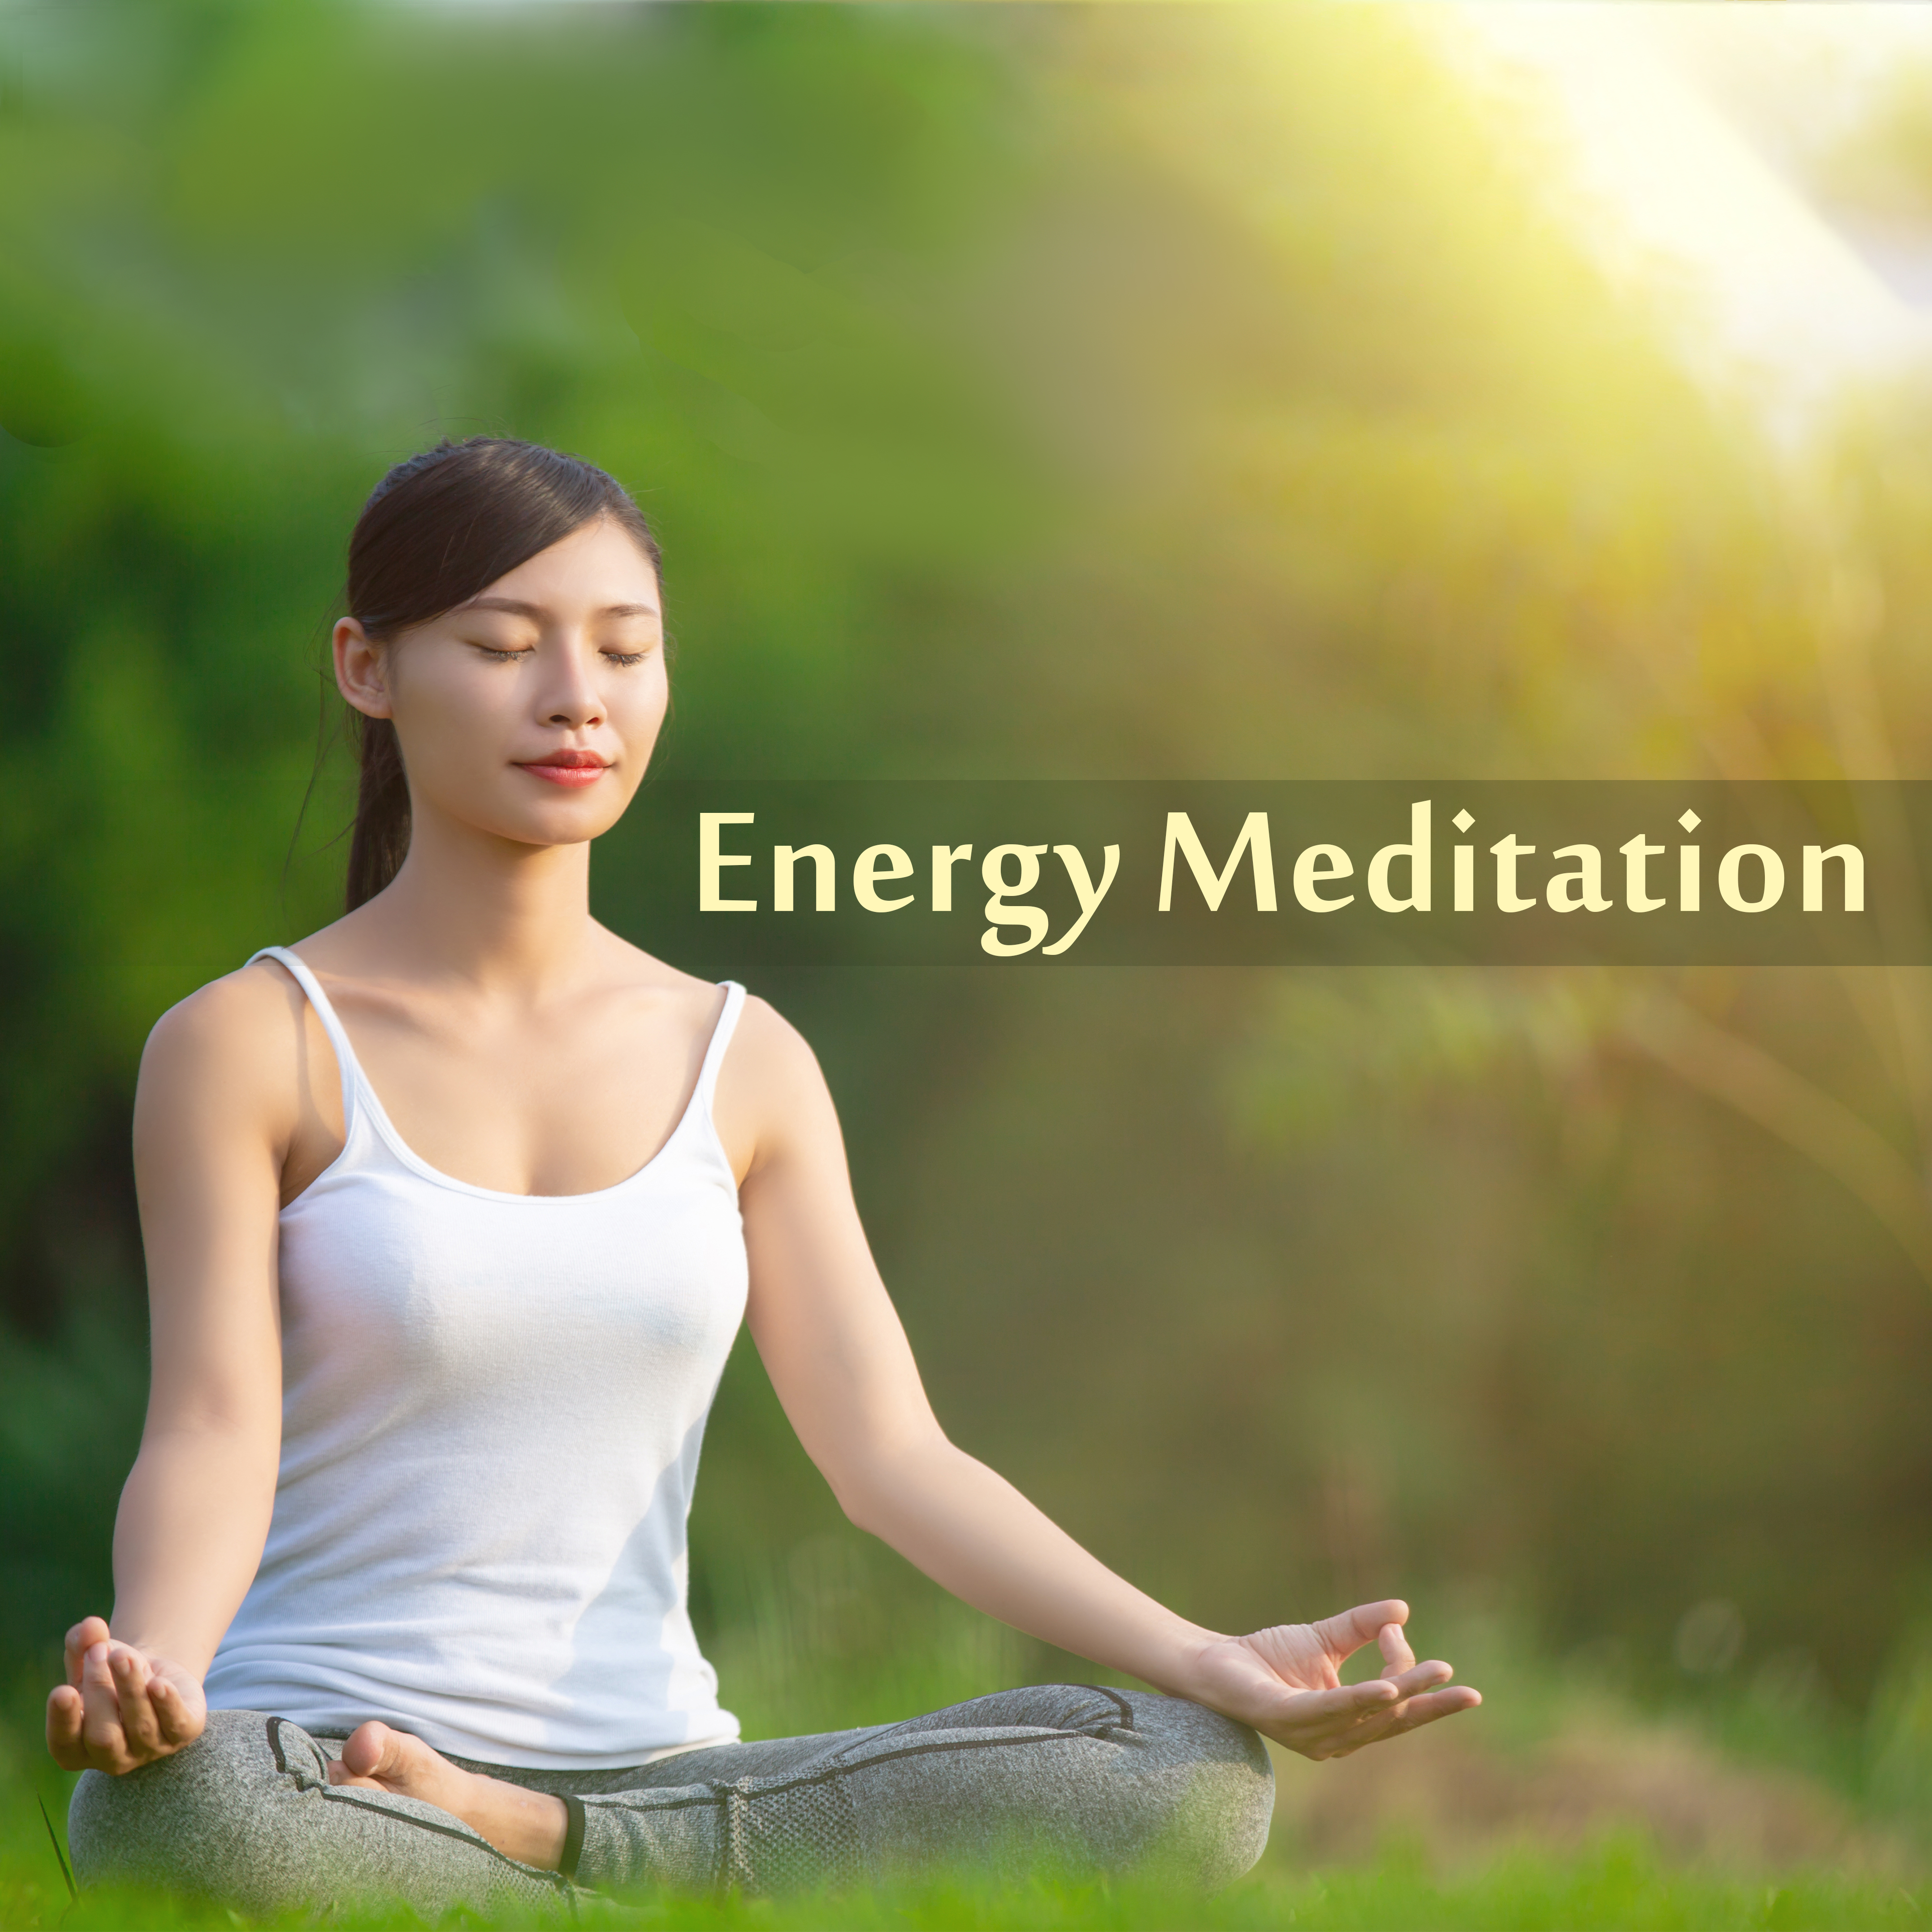 Energy Meditation